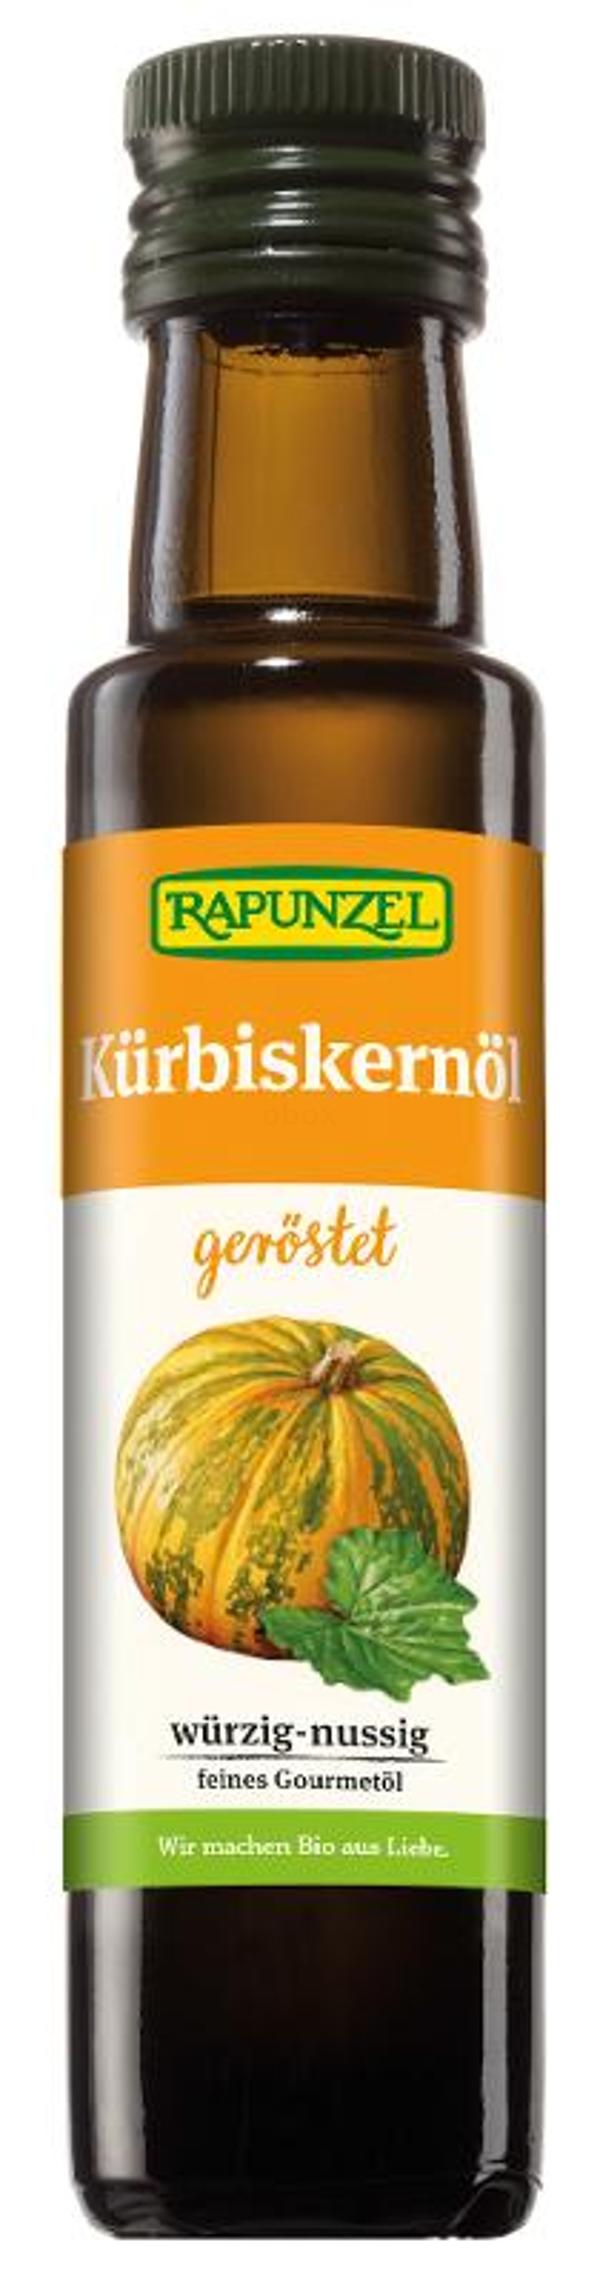 Produktfoto zu Rapunzel Kürbiskernöl geröstet - 100ml